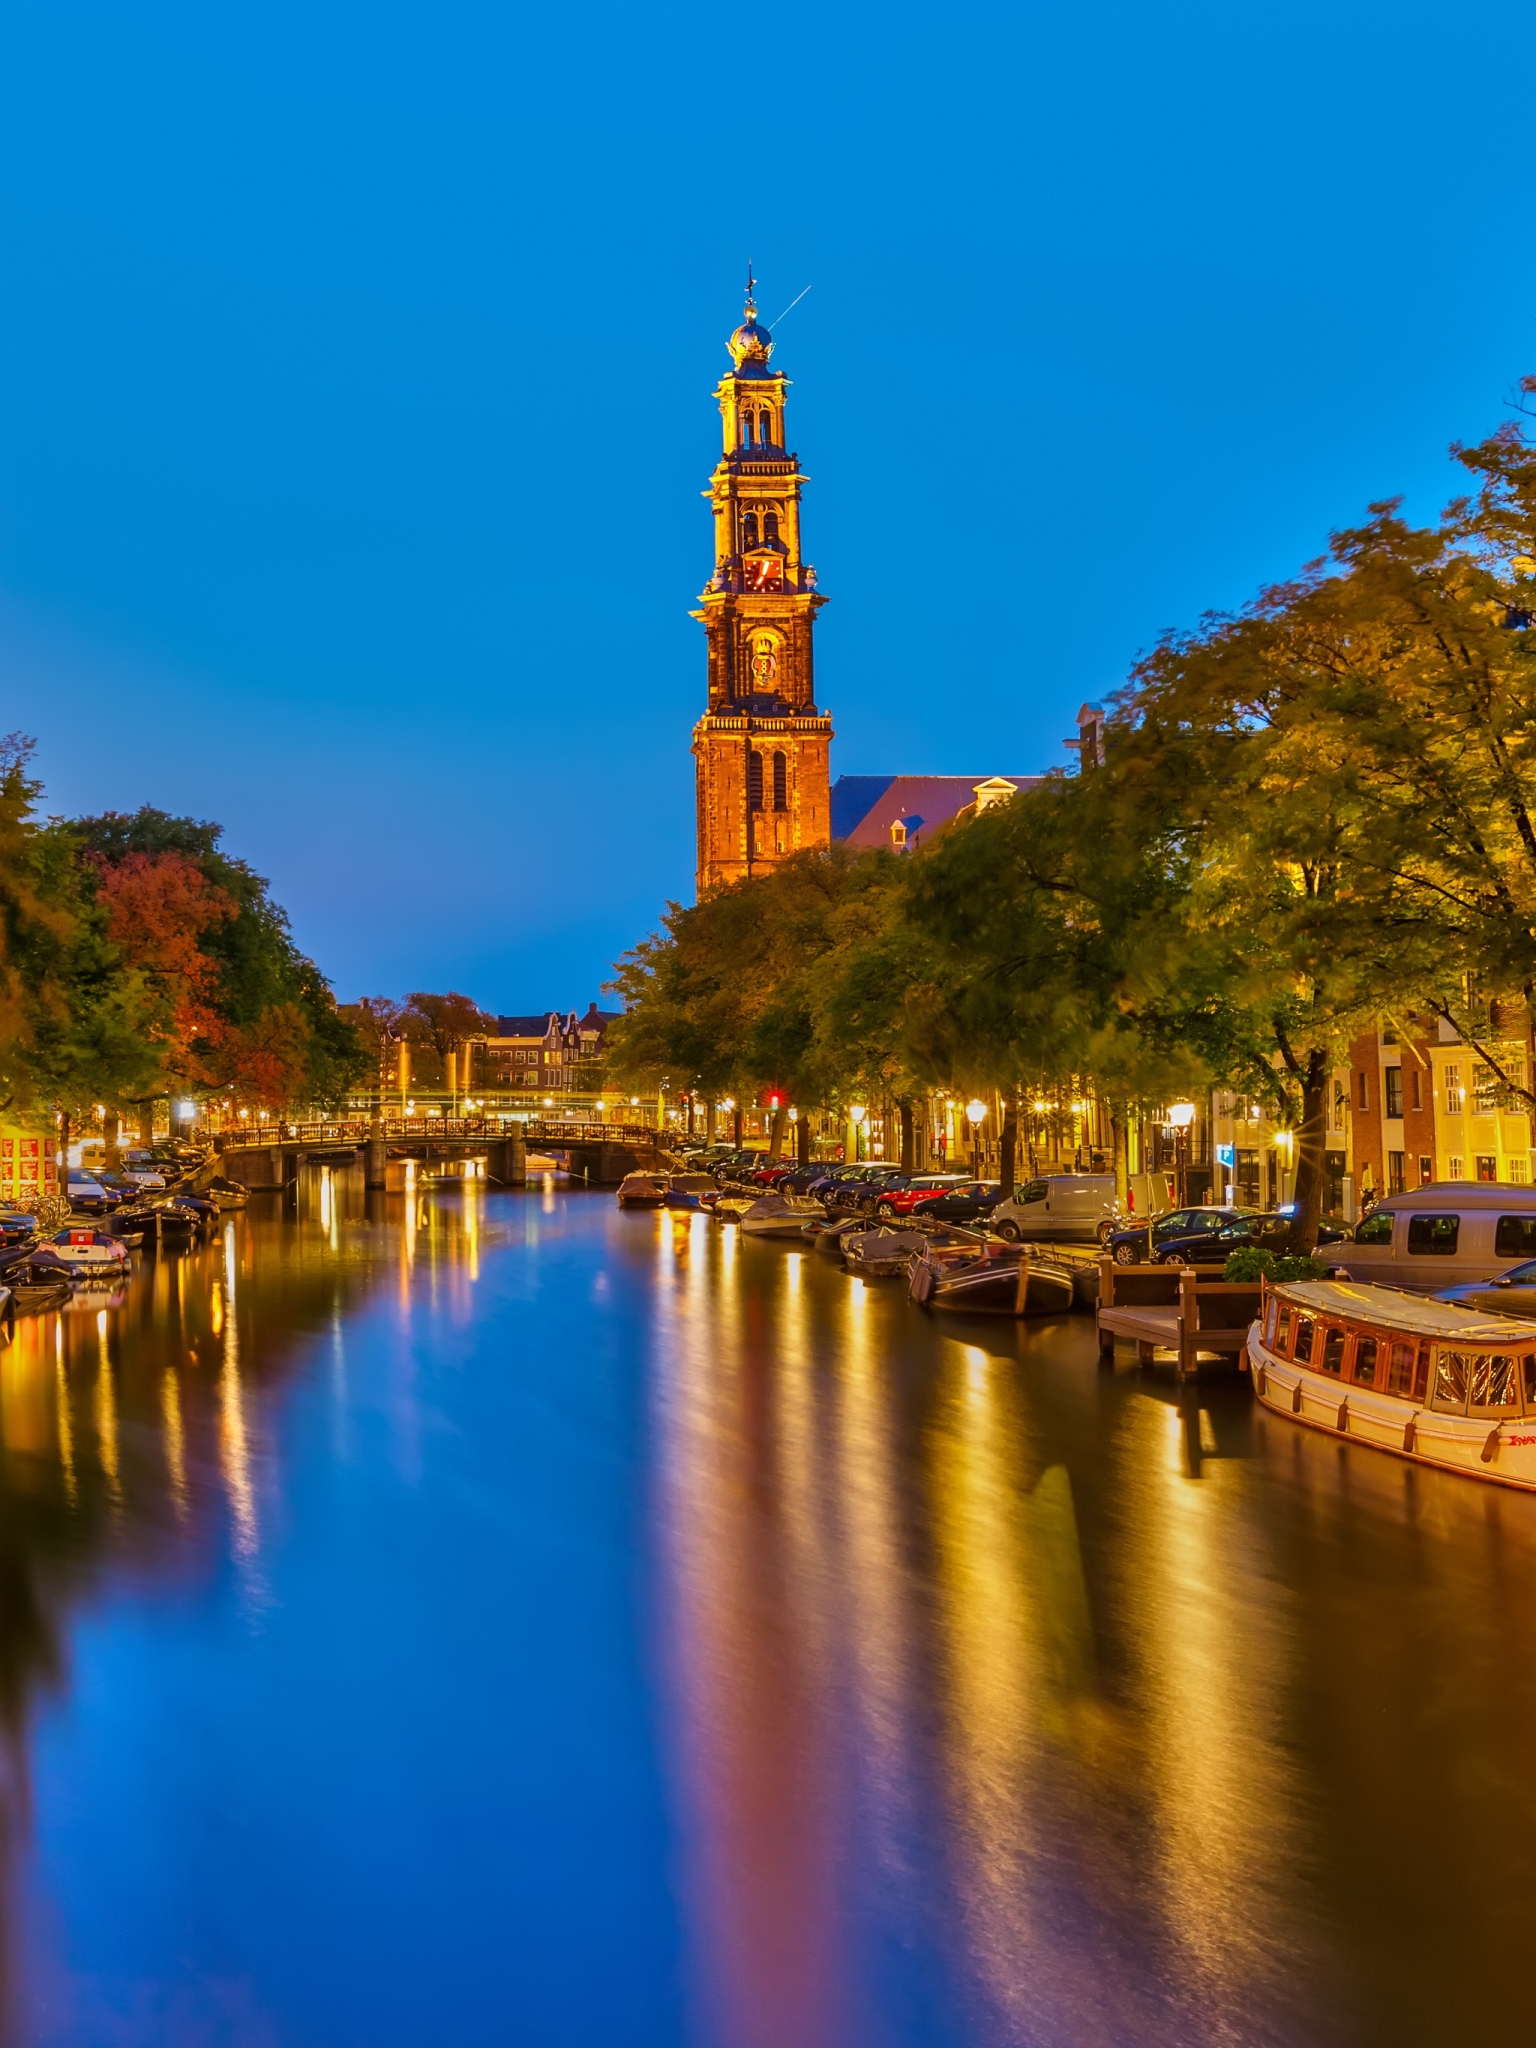 Amsterdam Netherlands for Apple iPad Air 2 resolution